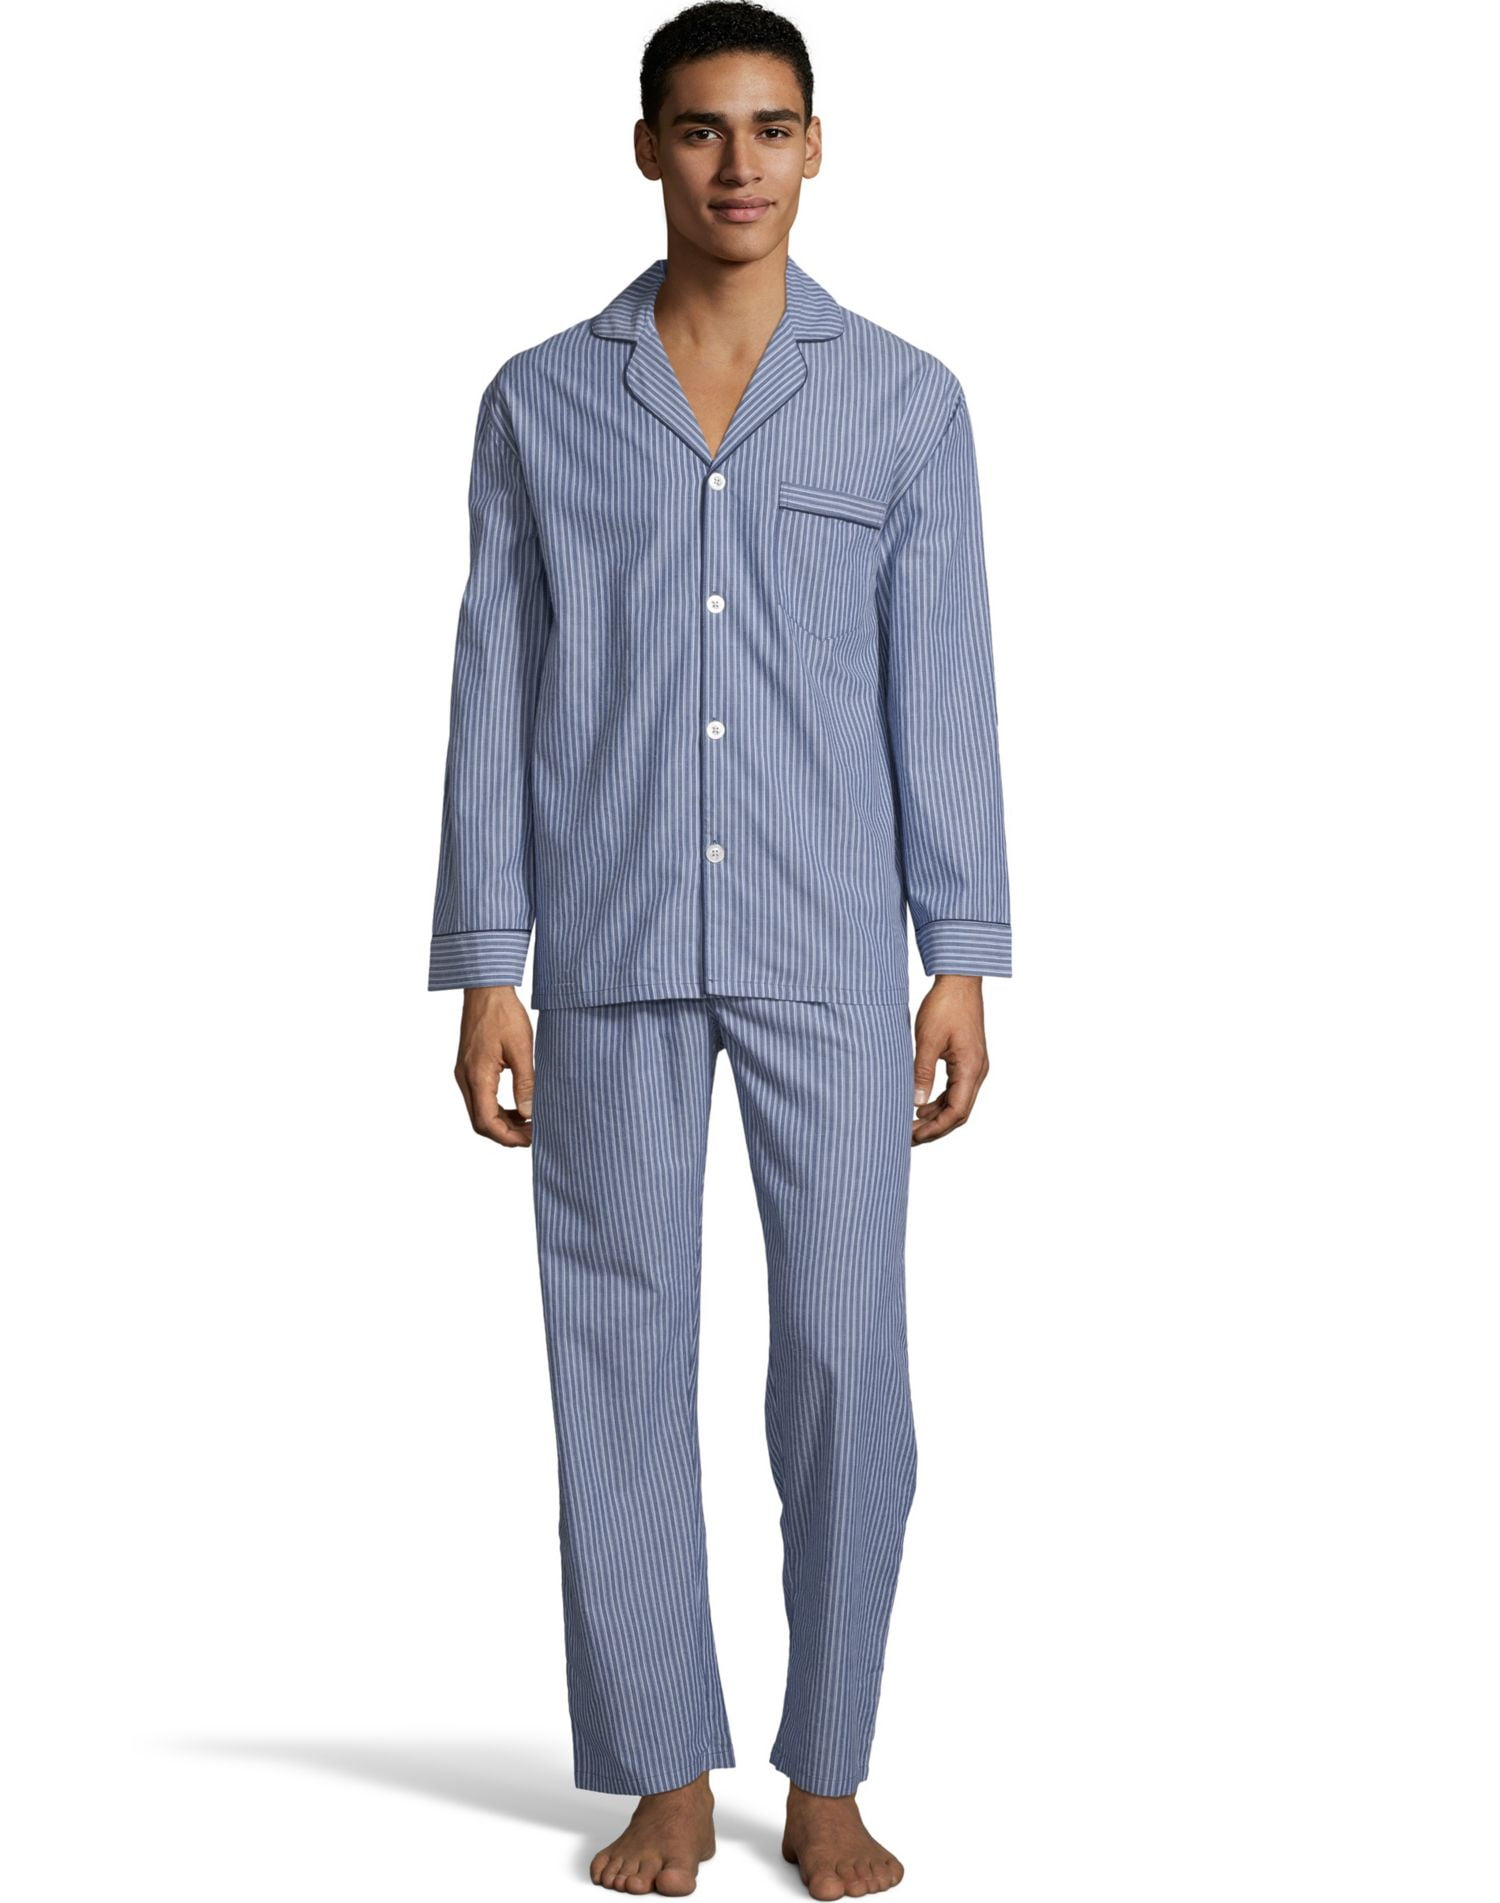 Hanes Mens Woven Pajamas, S, Blue Stripe, S, Blue Stripe - Walmart.com